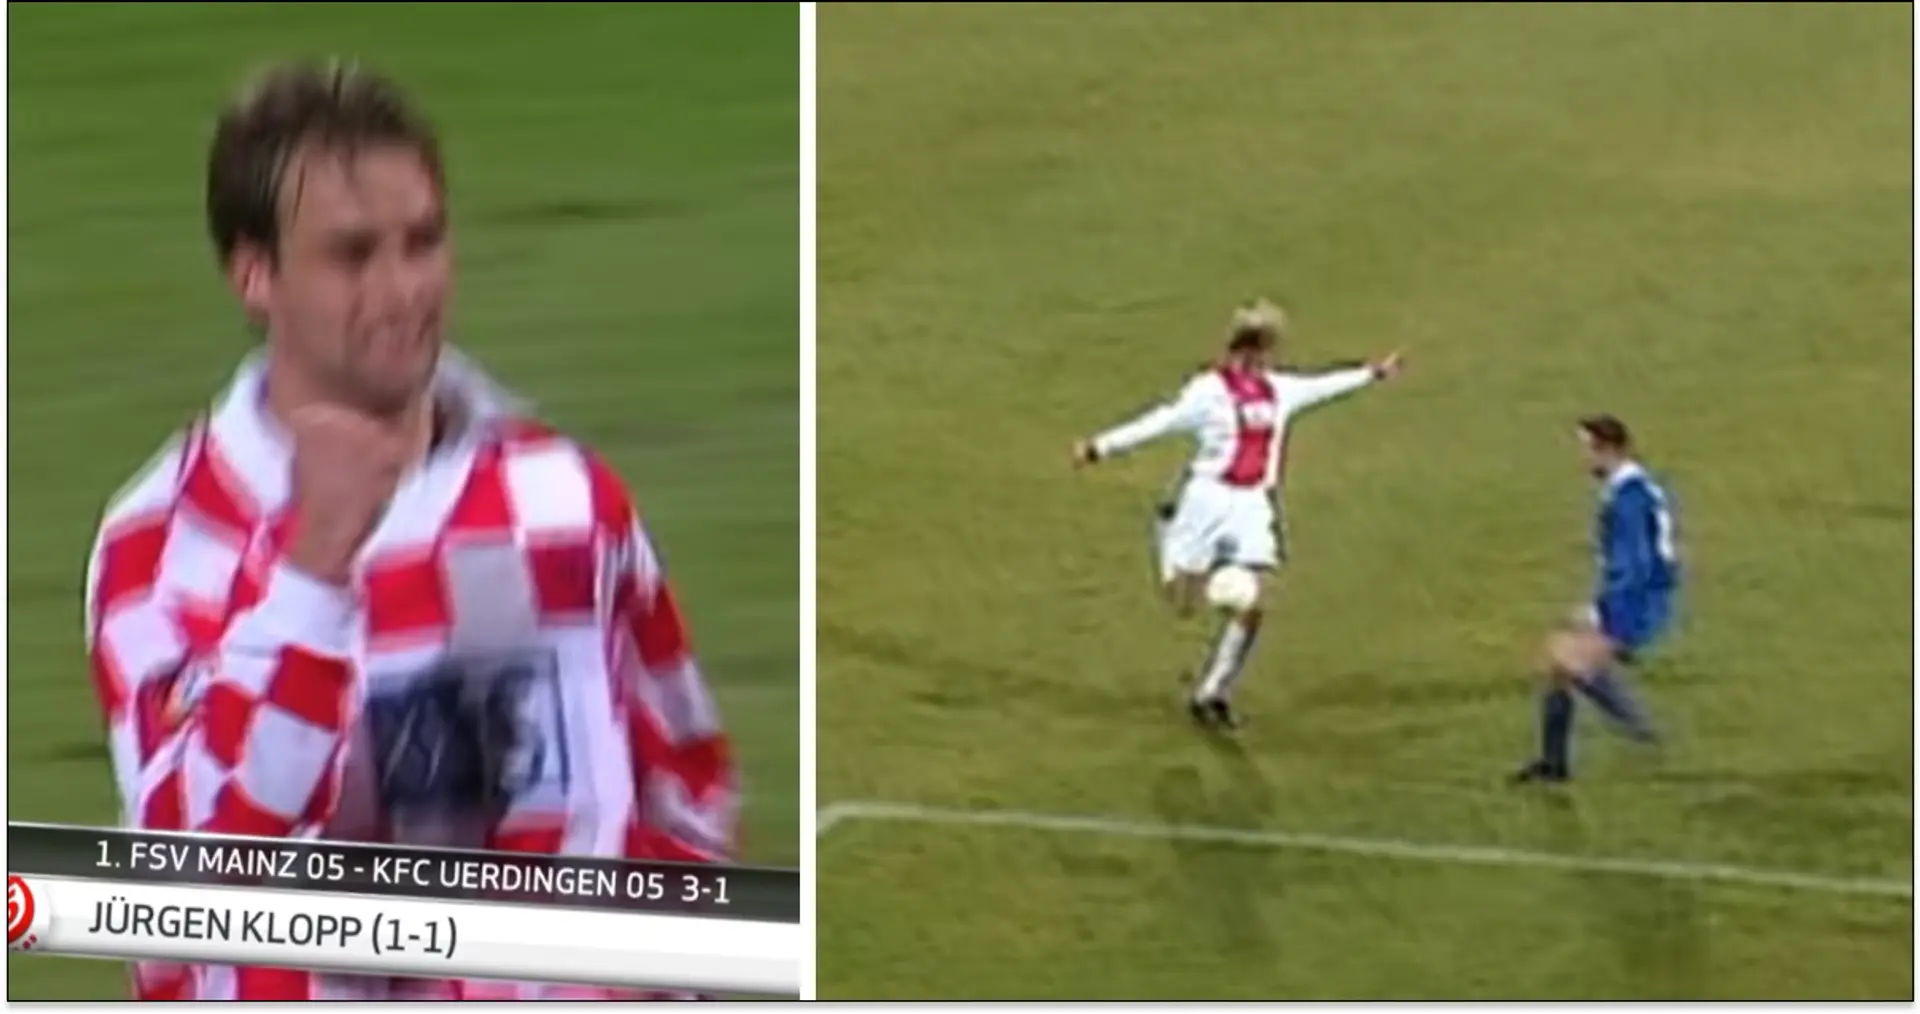 Jurgen Klopp's top 5 goals during his playing career (video)